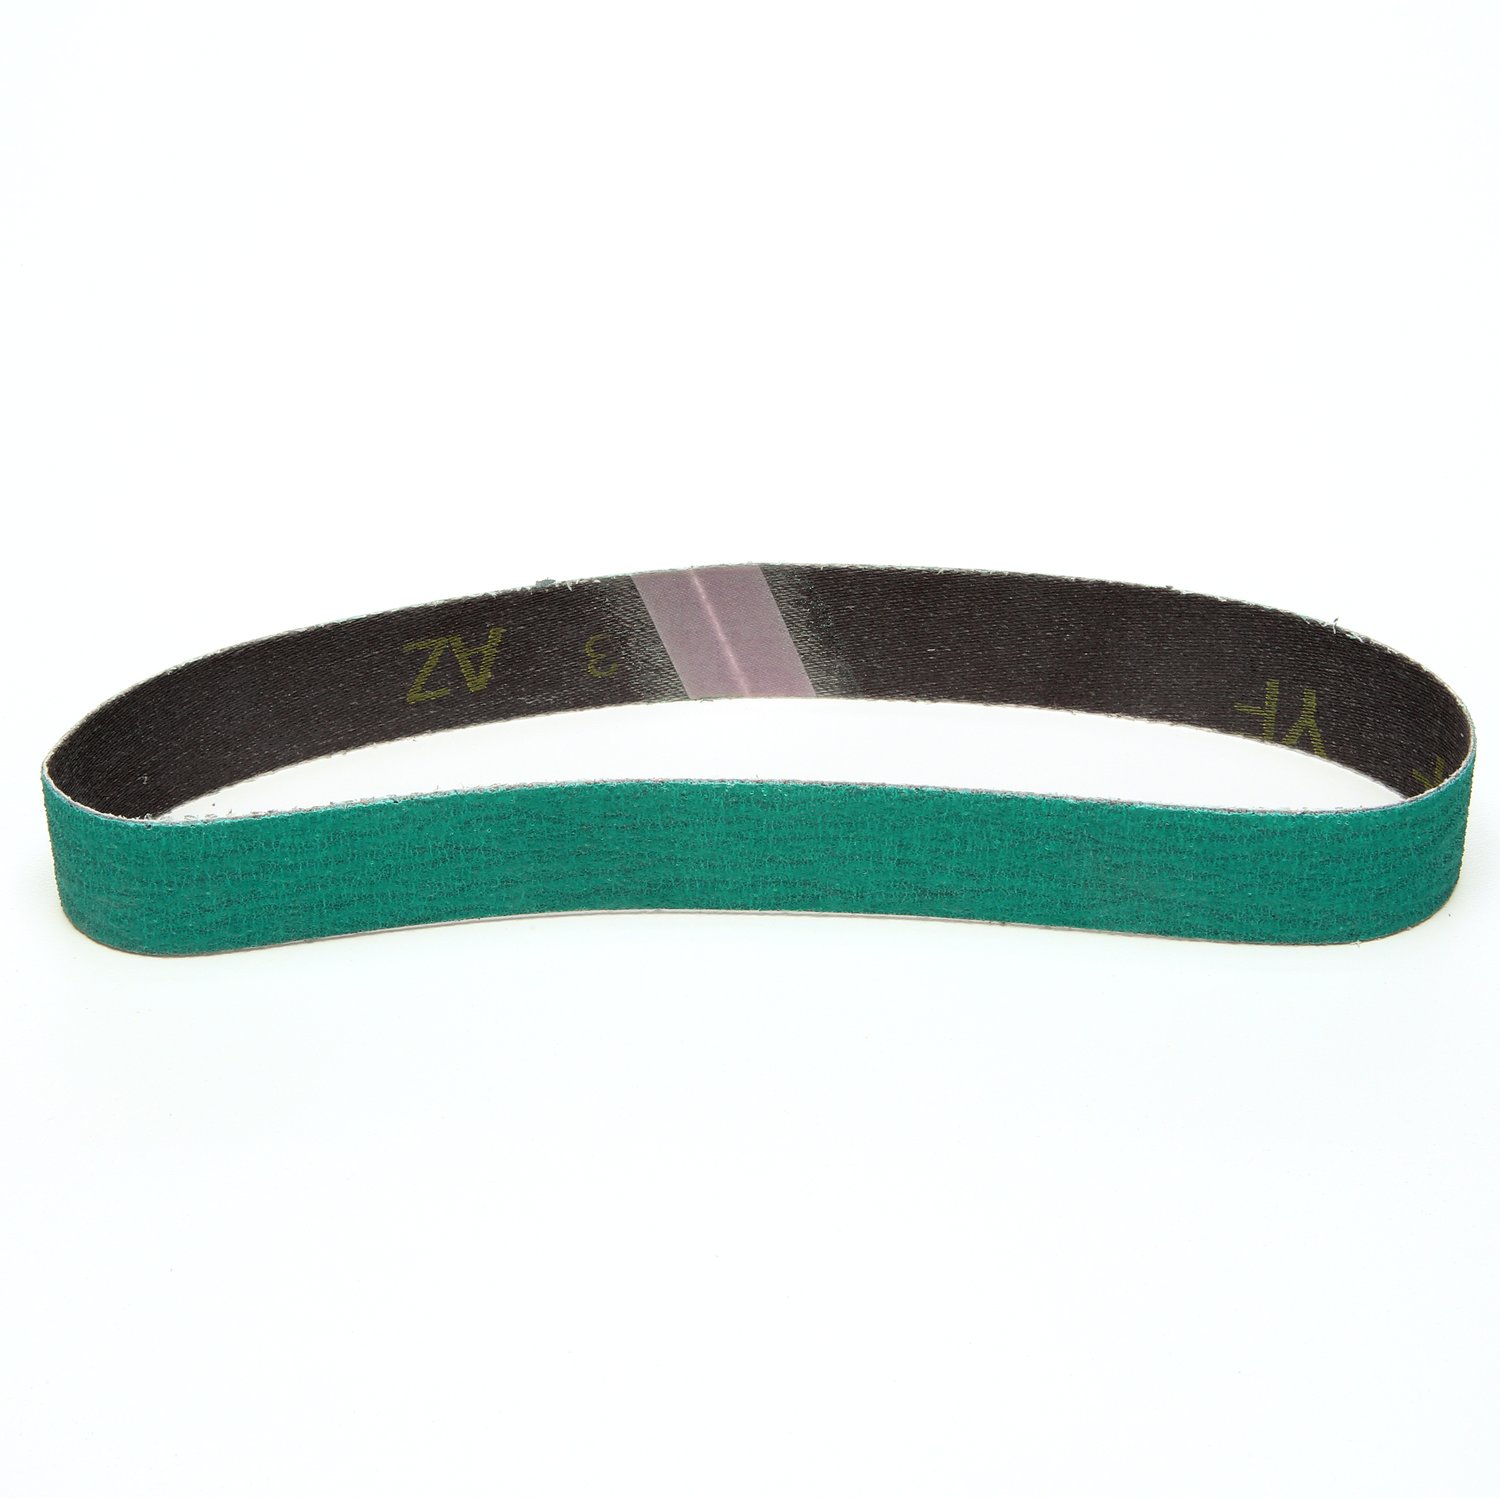 7010515114 - 3M Cloth Belt 577F, 60 YF-weight, 1-1/2 in x 30 in, Fabri-lok,
Single-flex